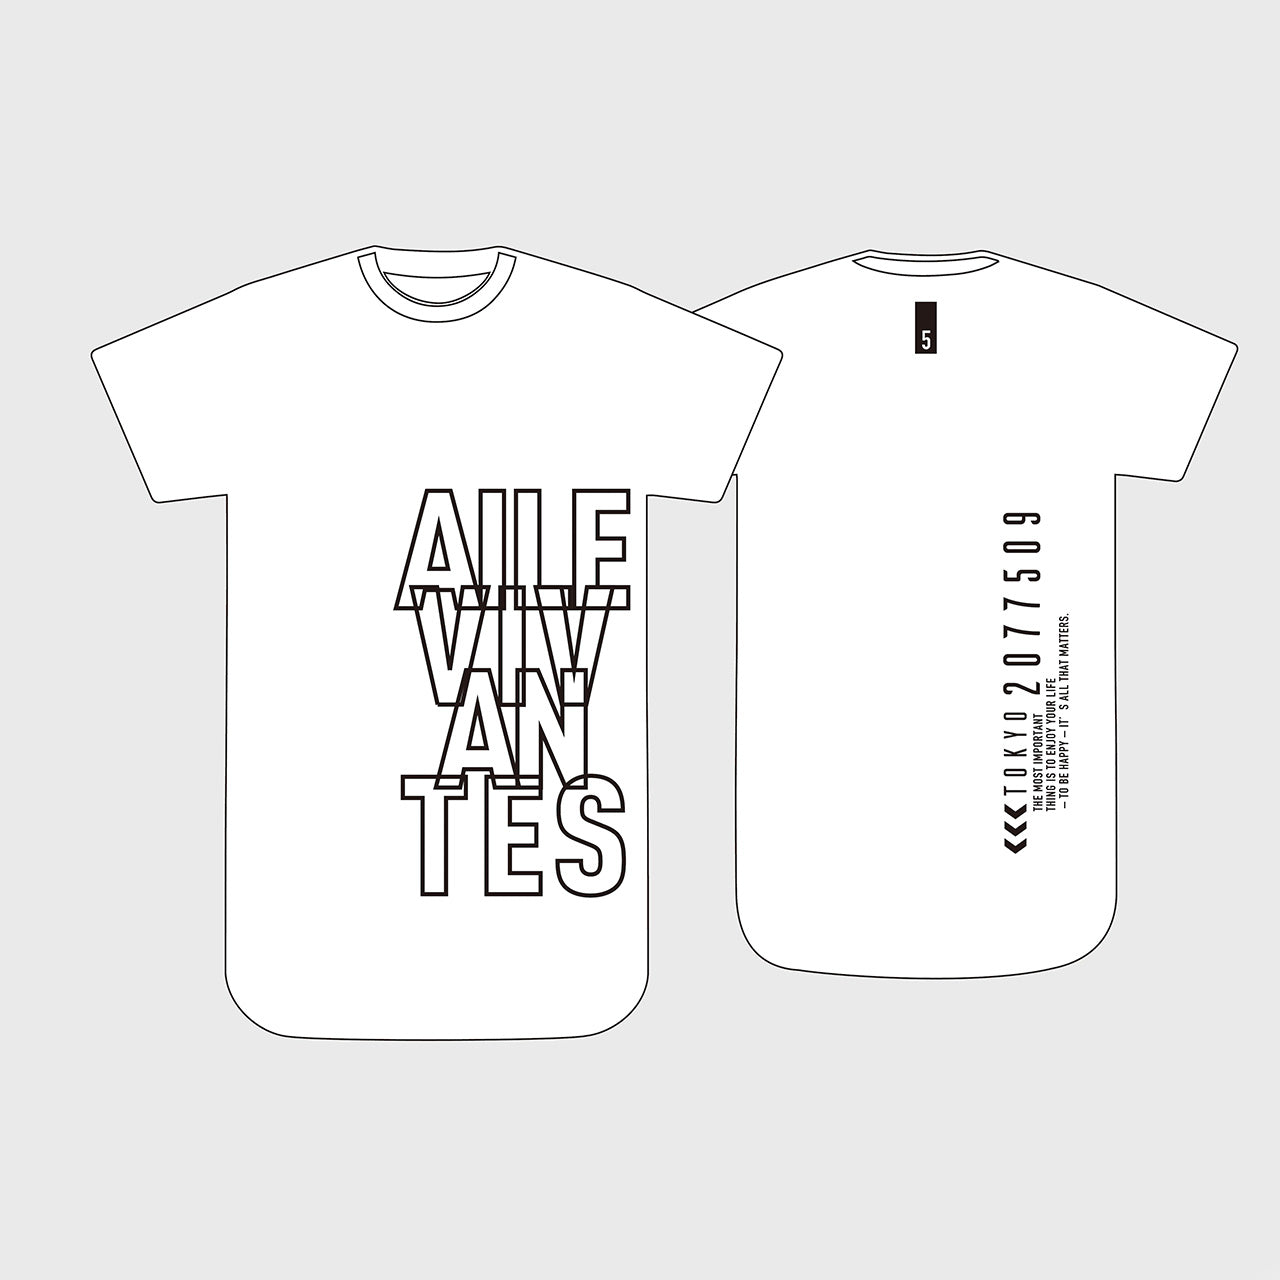 AILE_tatelogo T-shirts